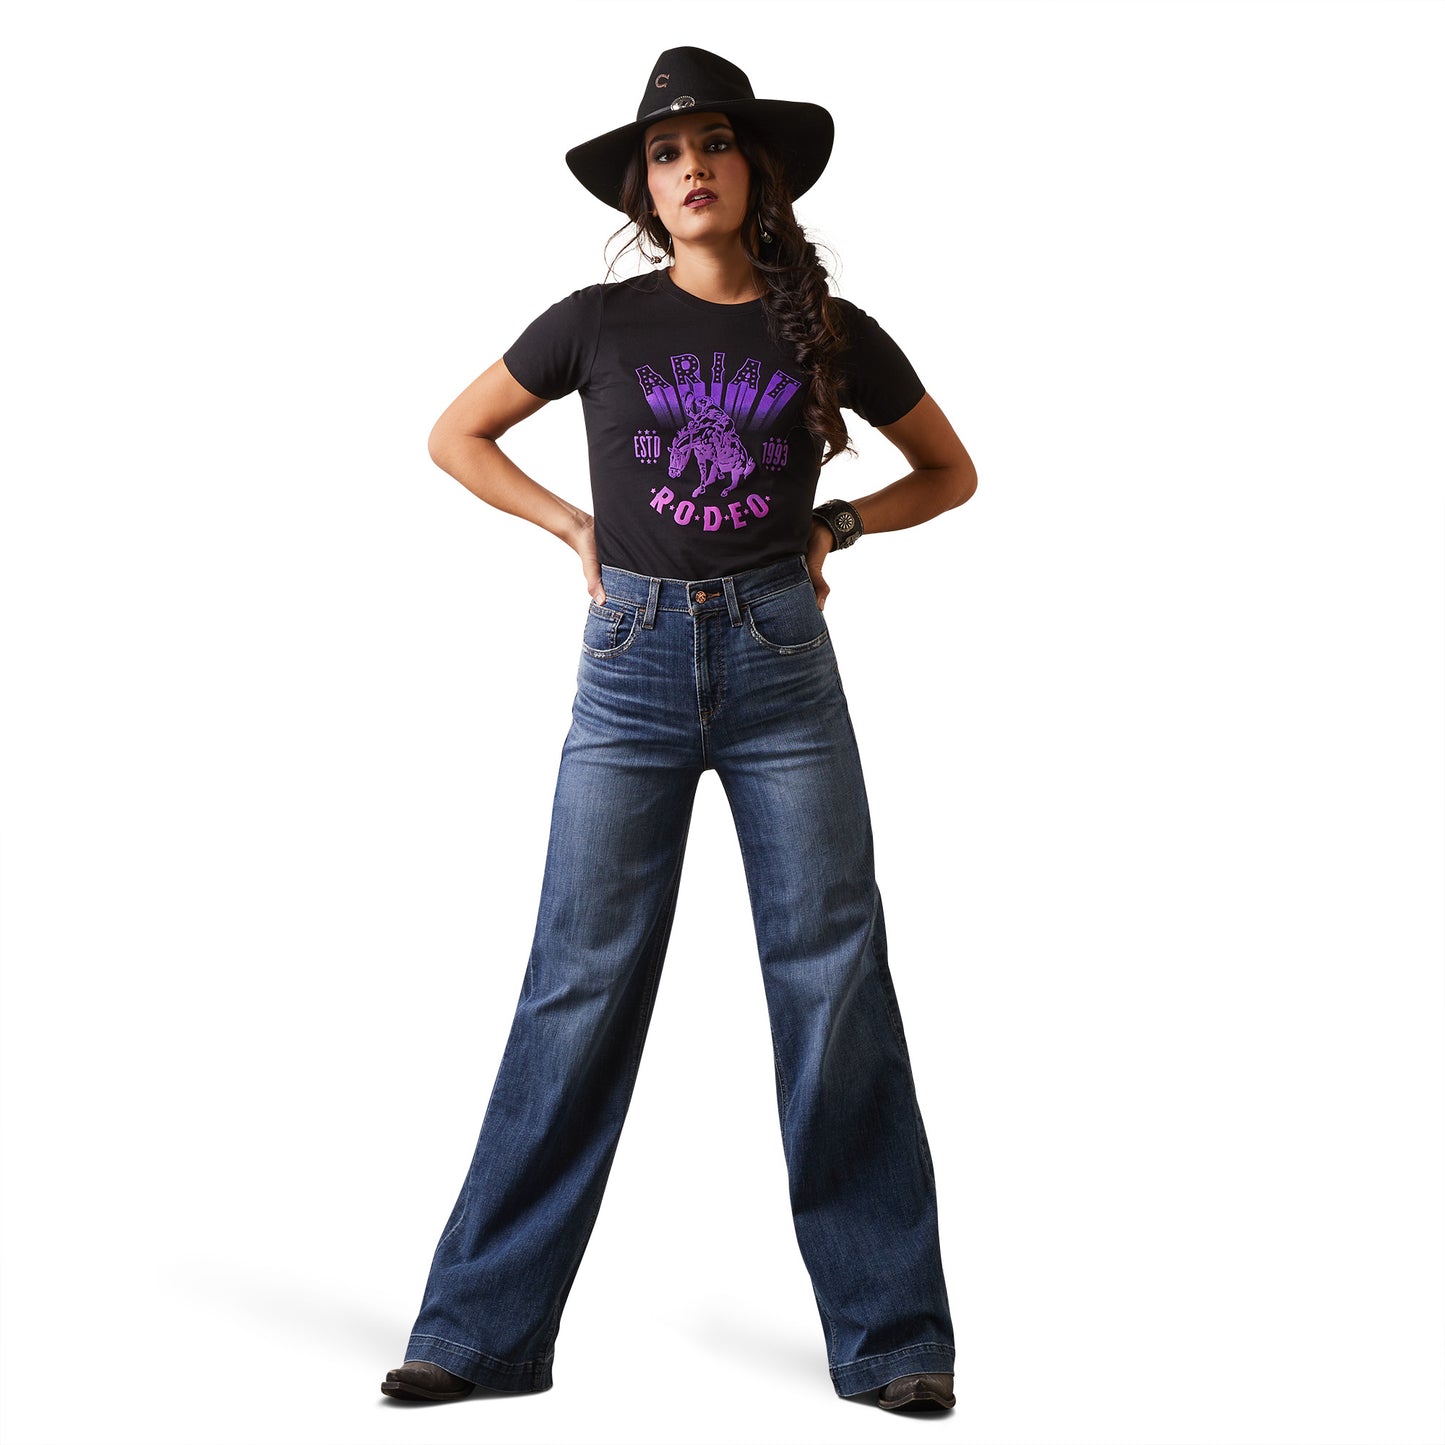 Ariat® Ladies Vintage Rodeo Black Graphic T-Shirt 10044614